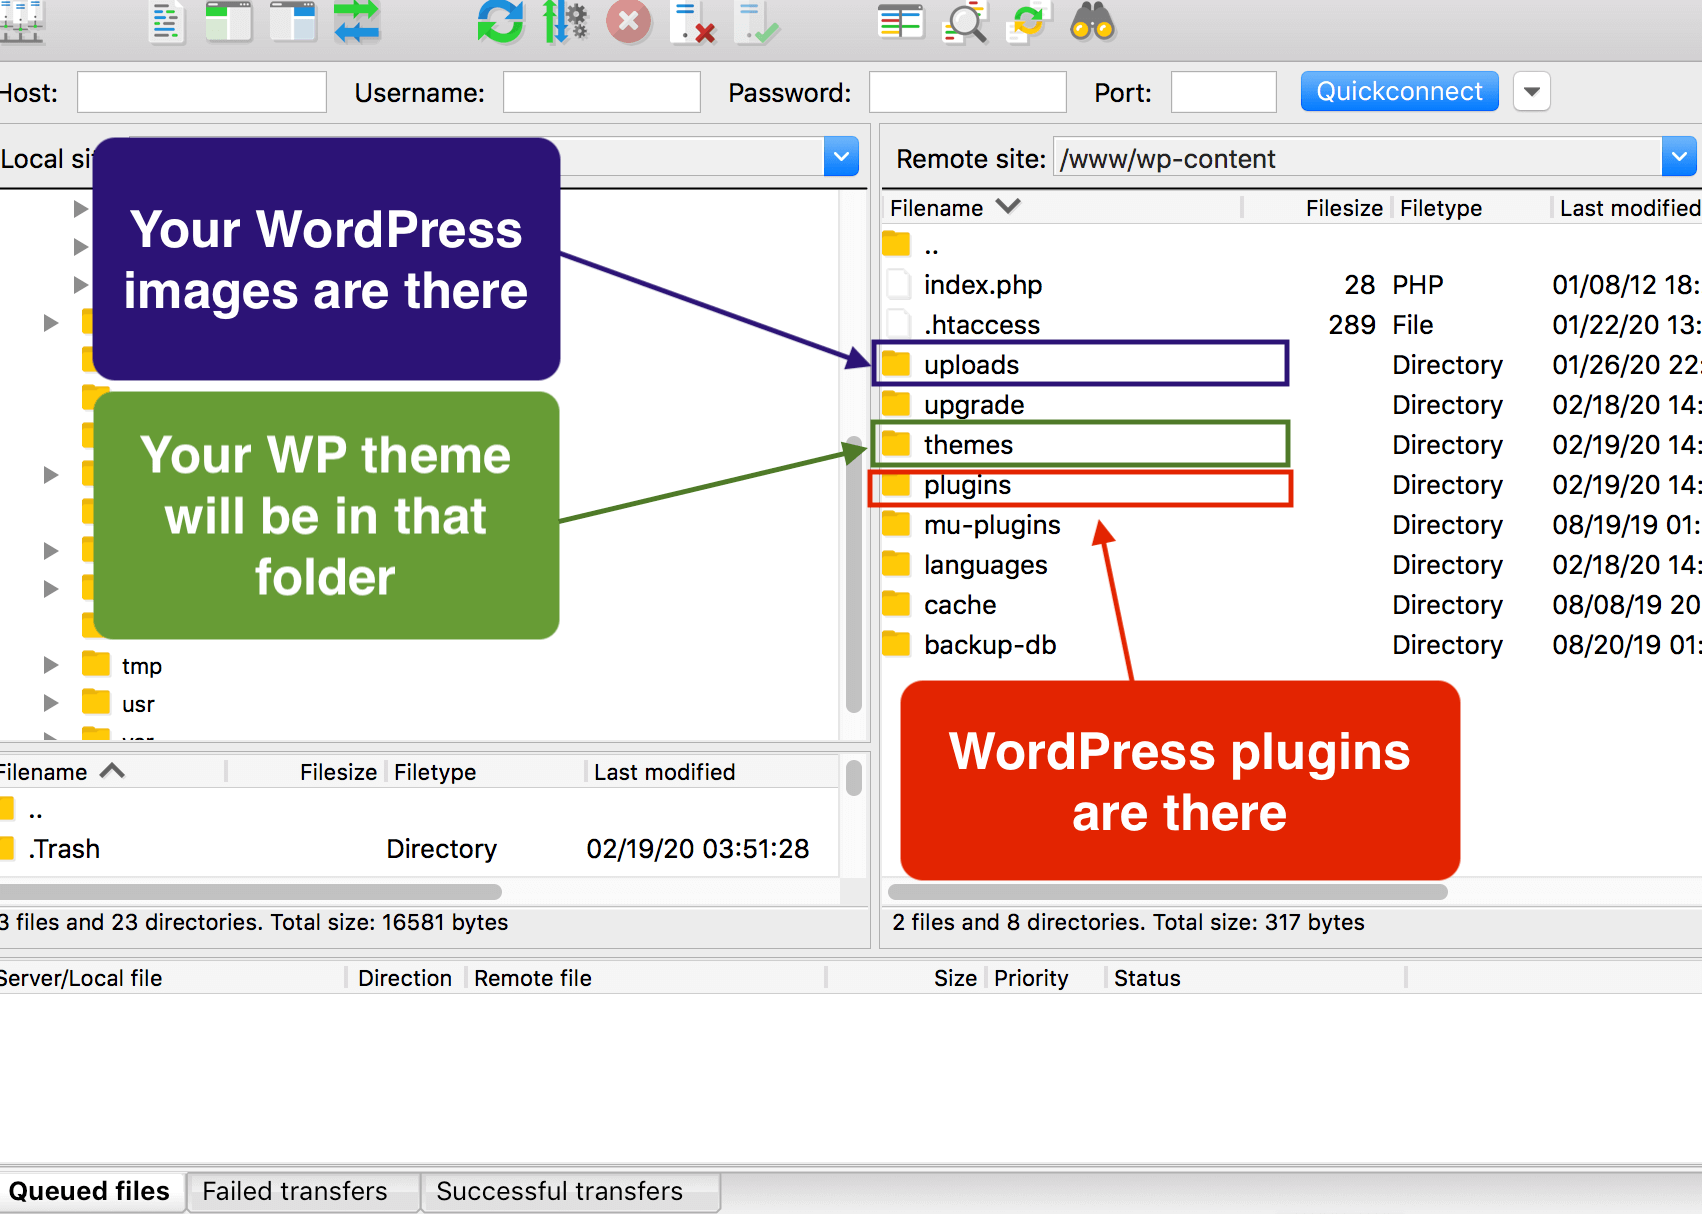 "wp-uploads", "themes" and "plugins" folders